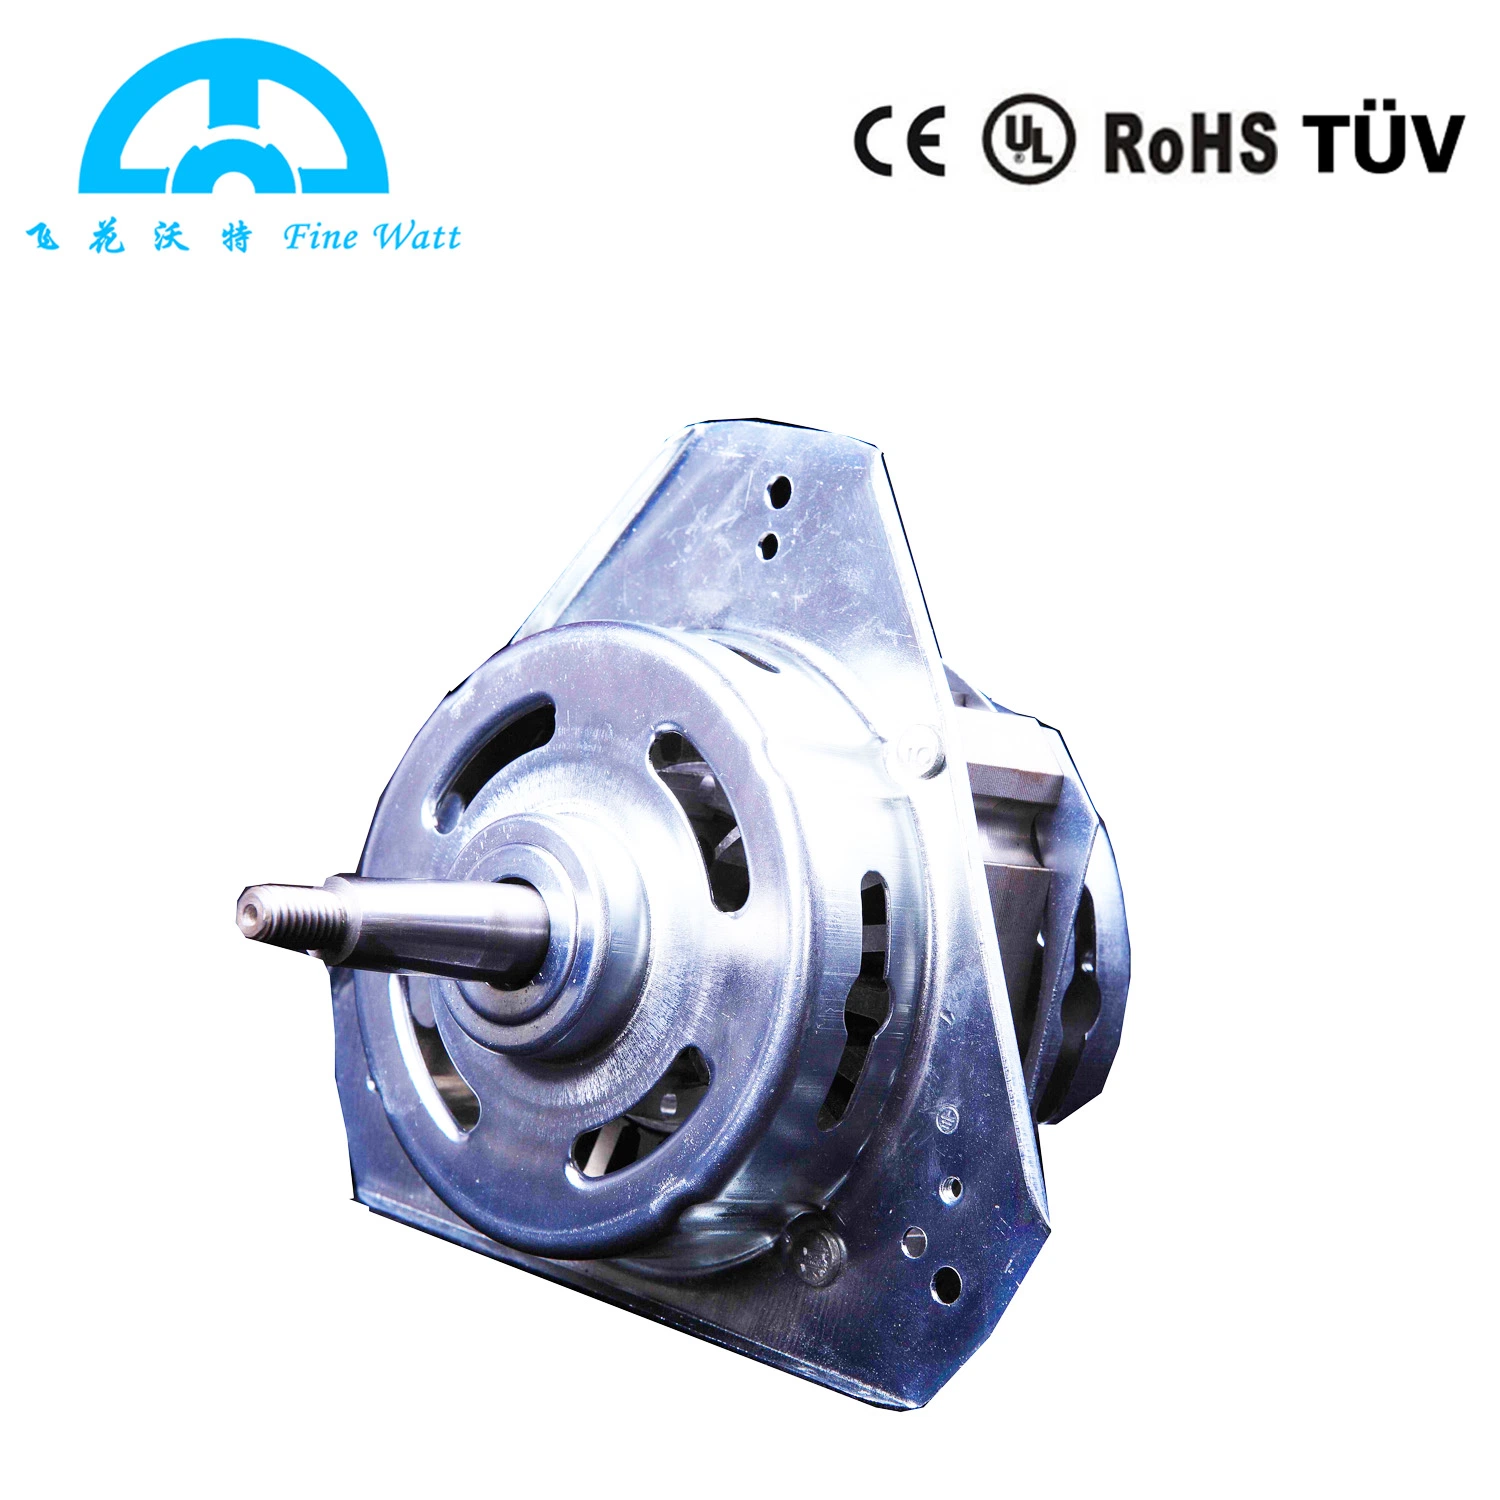 1350-3200rpm el aluminio /Cooper Cable Lavadora Motor de giro